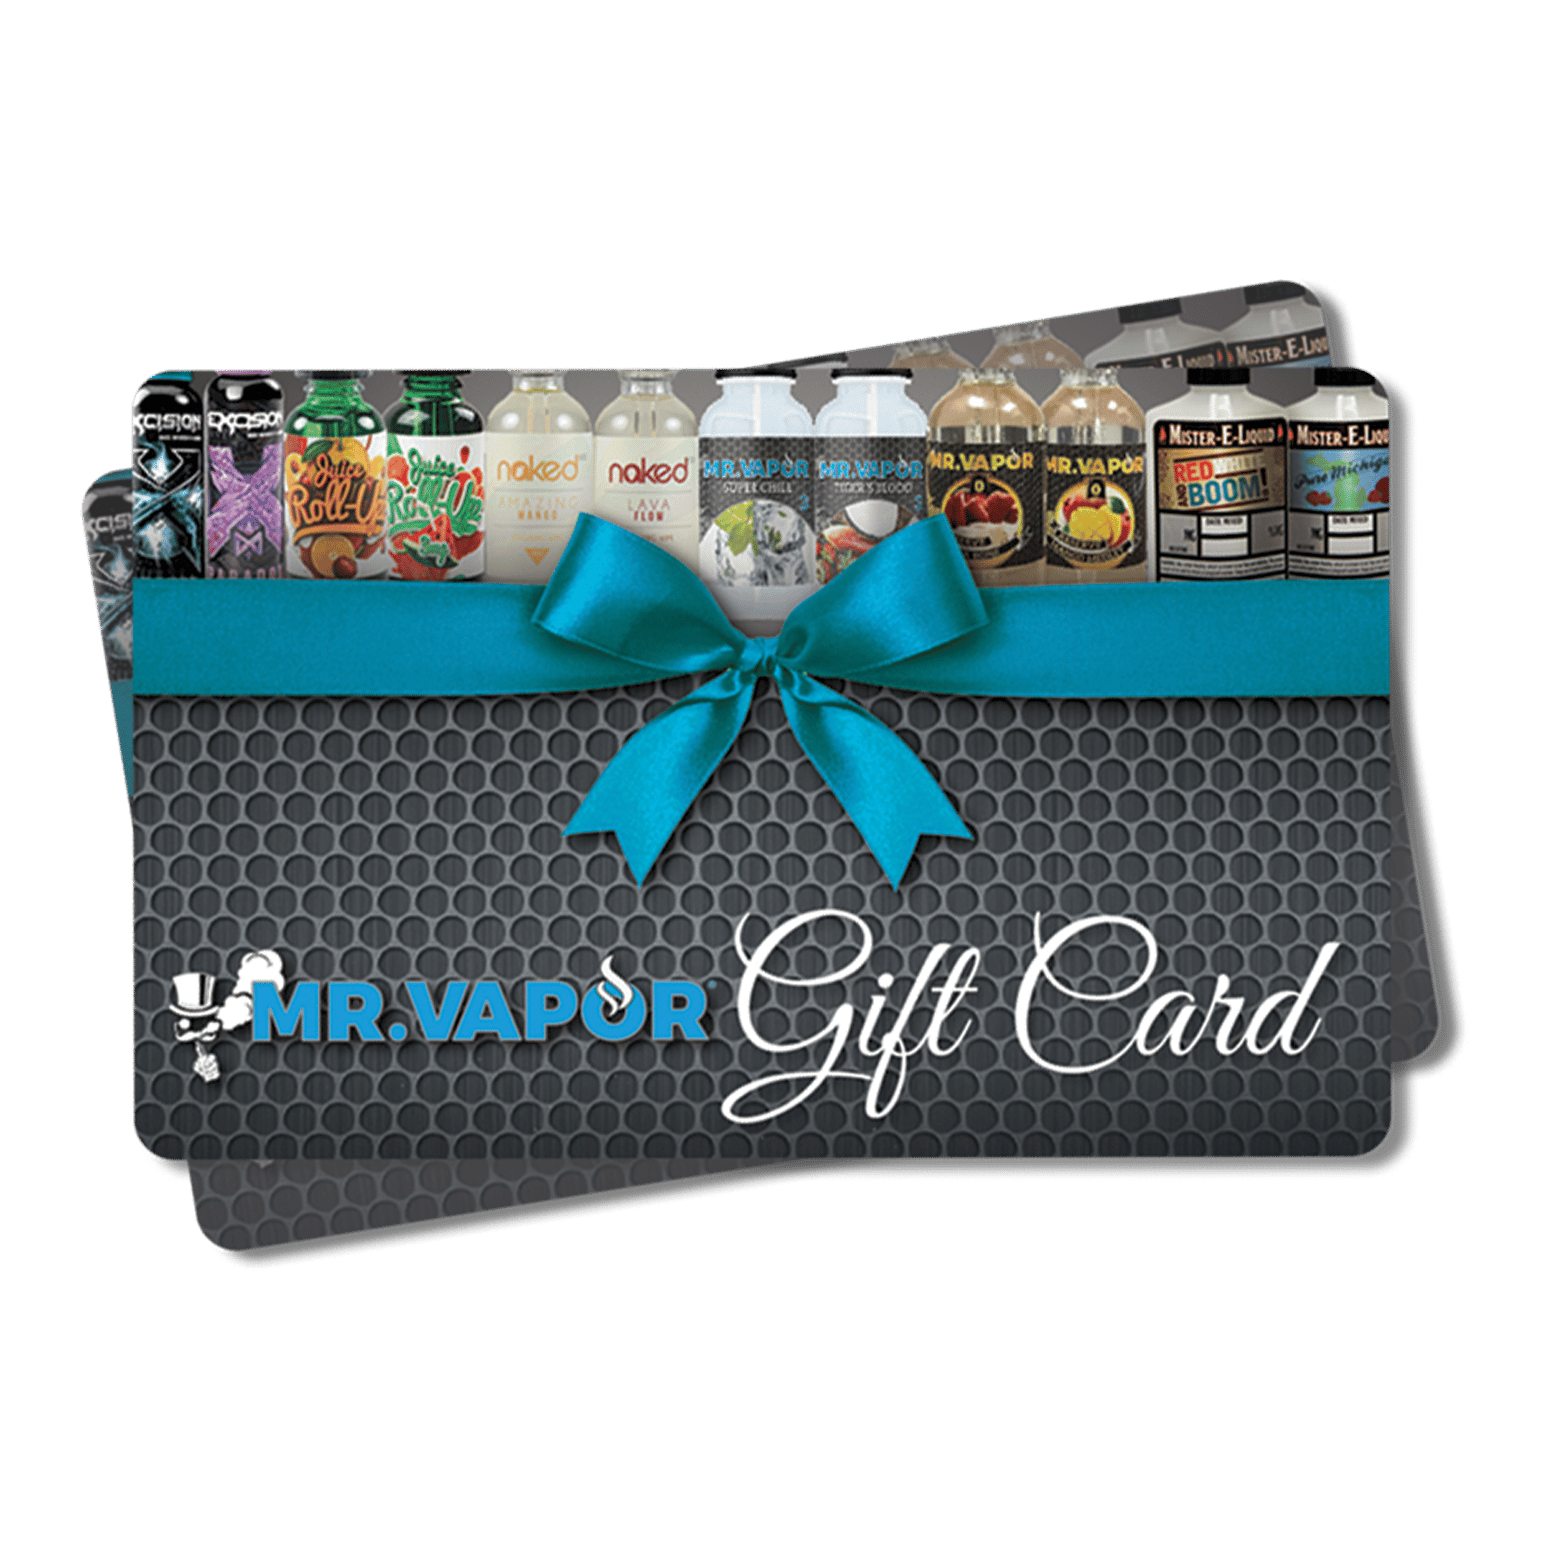 mr. vapor gift cards